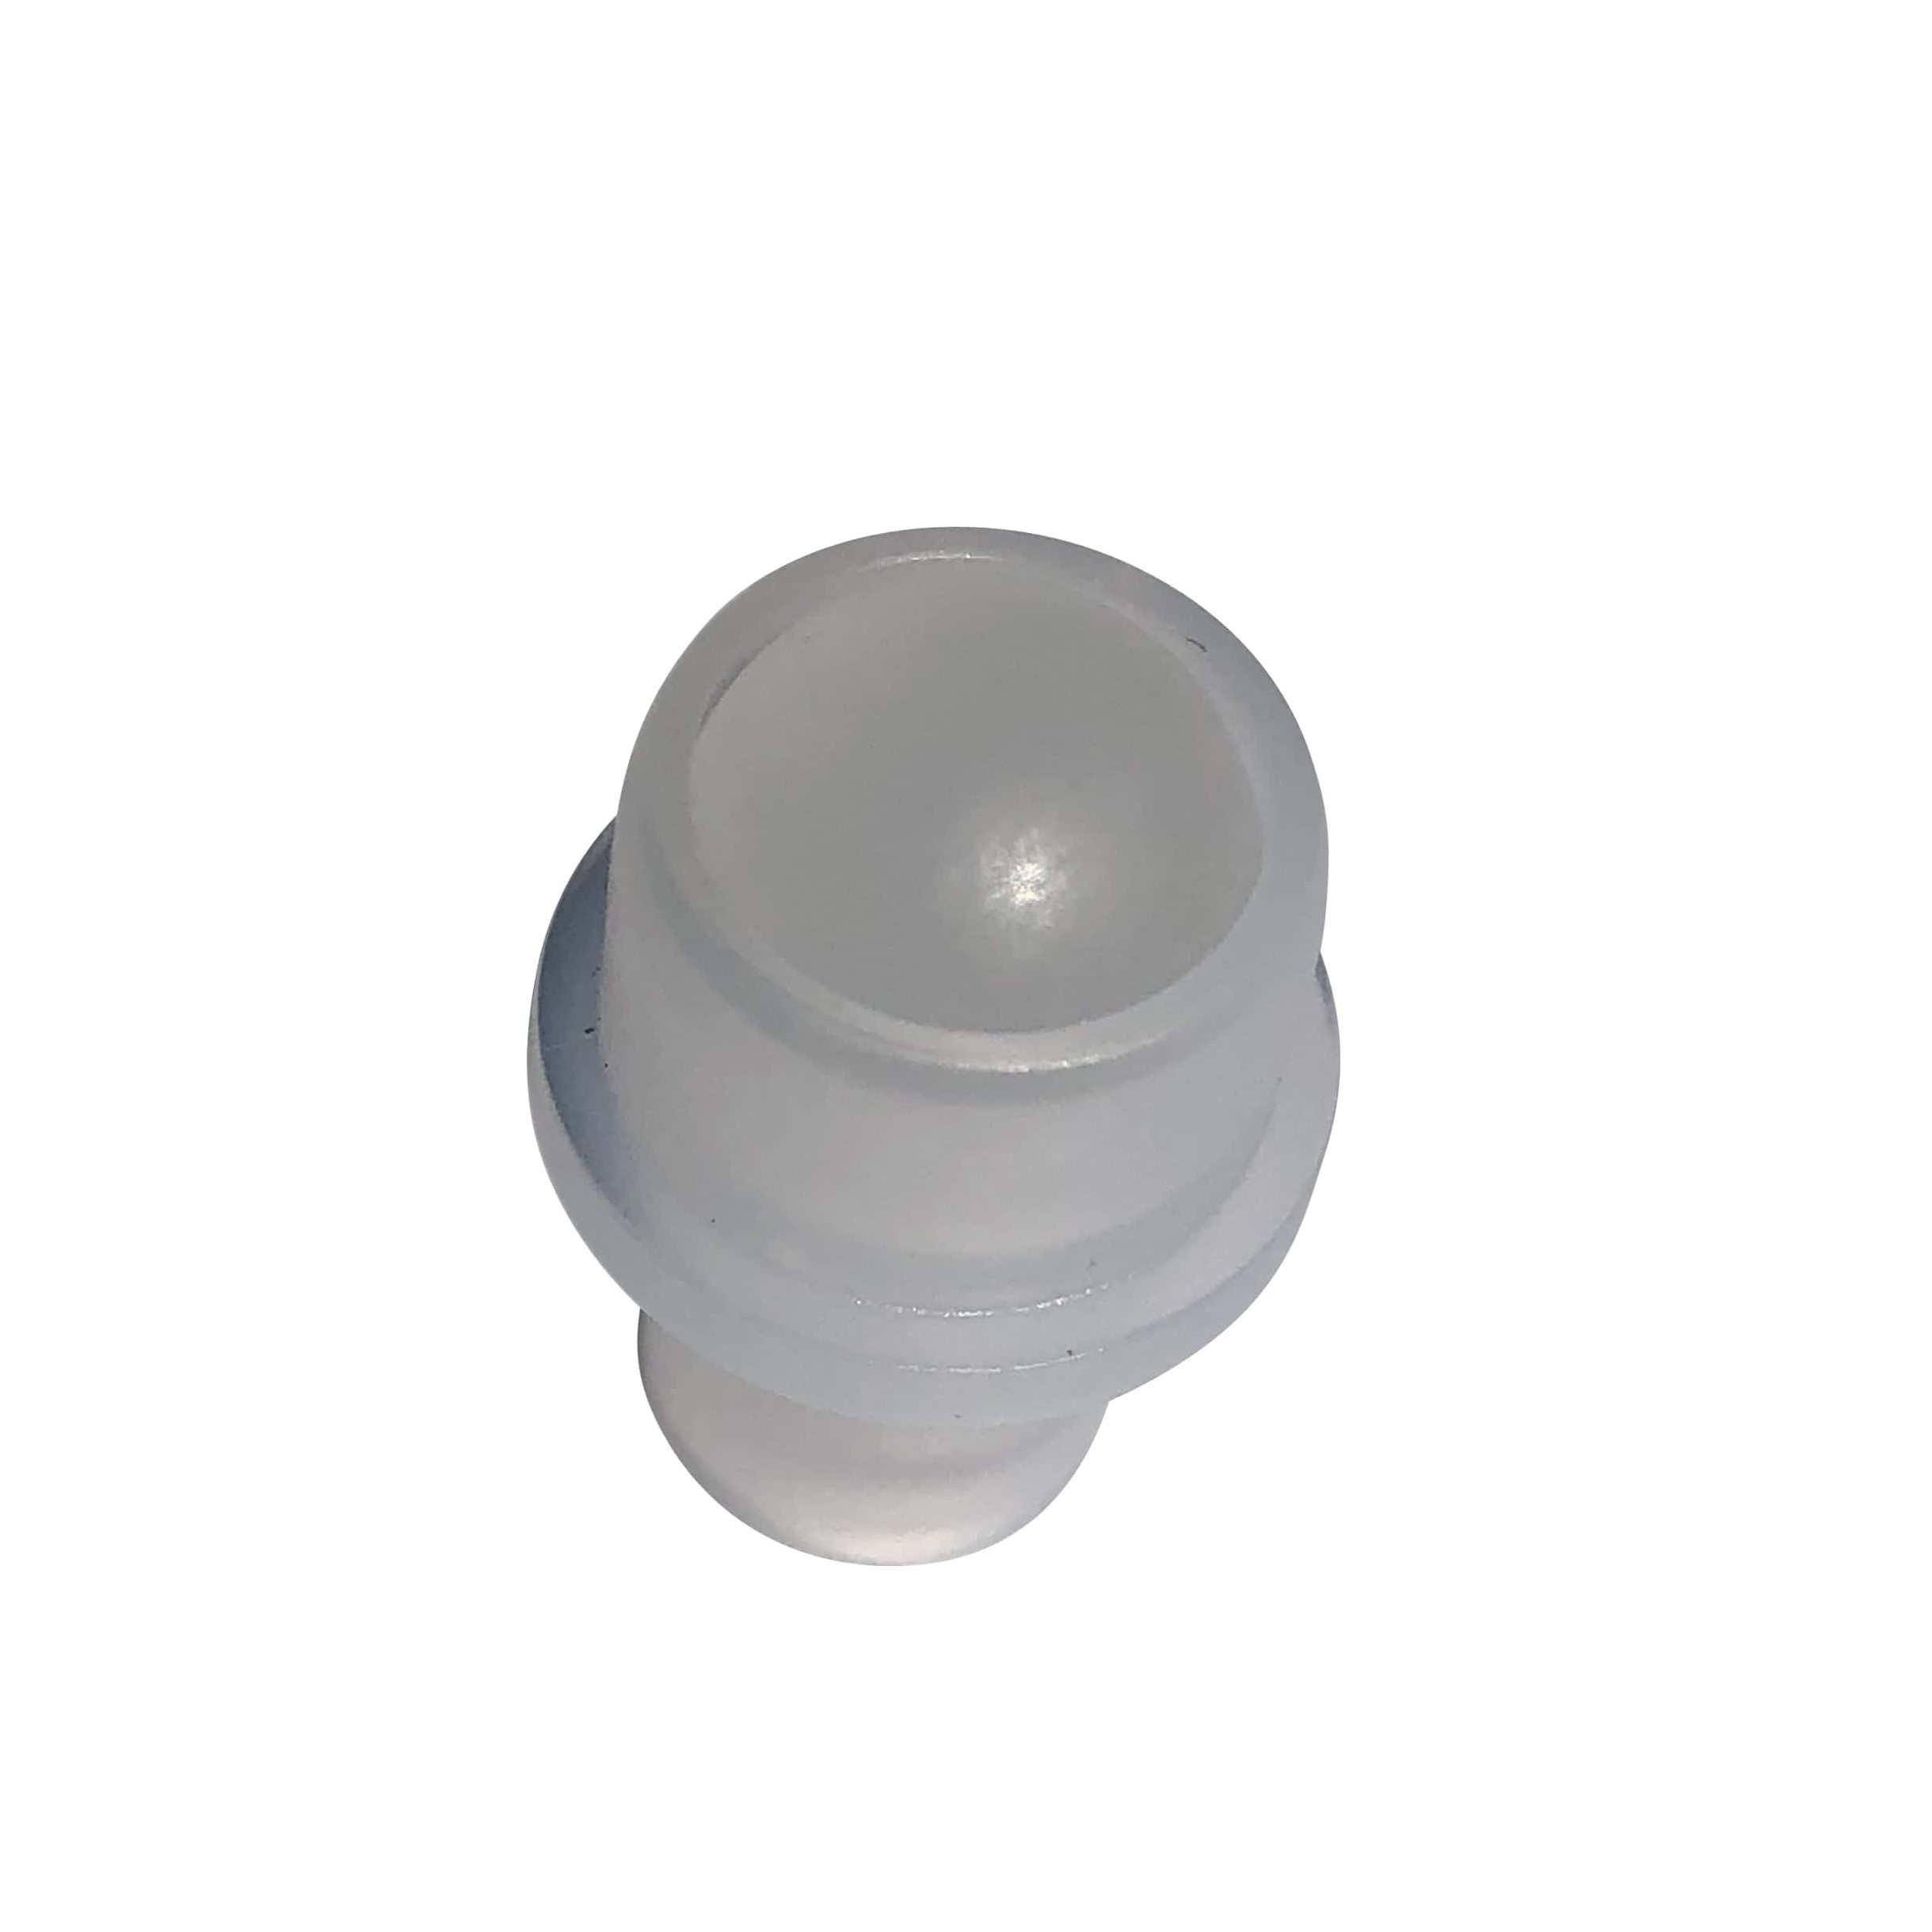 Insert pour flacon Roll-on 10 ml, plastique LDPE, blanc, nature